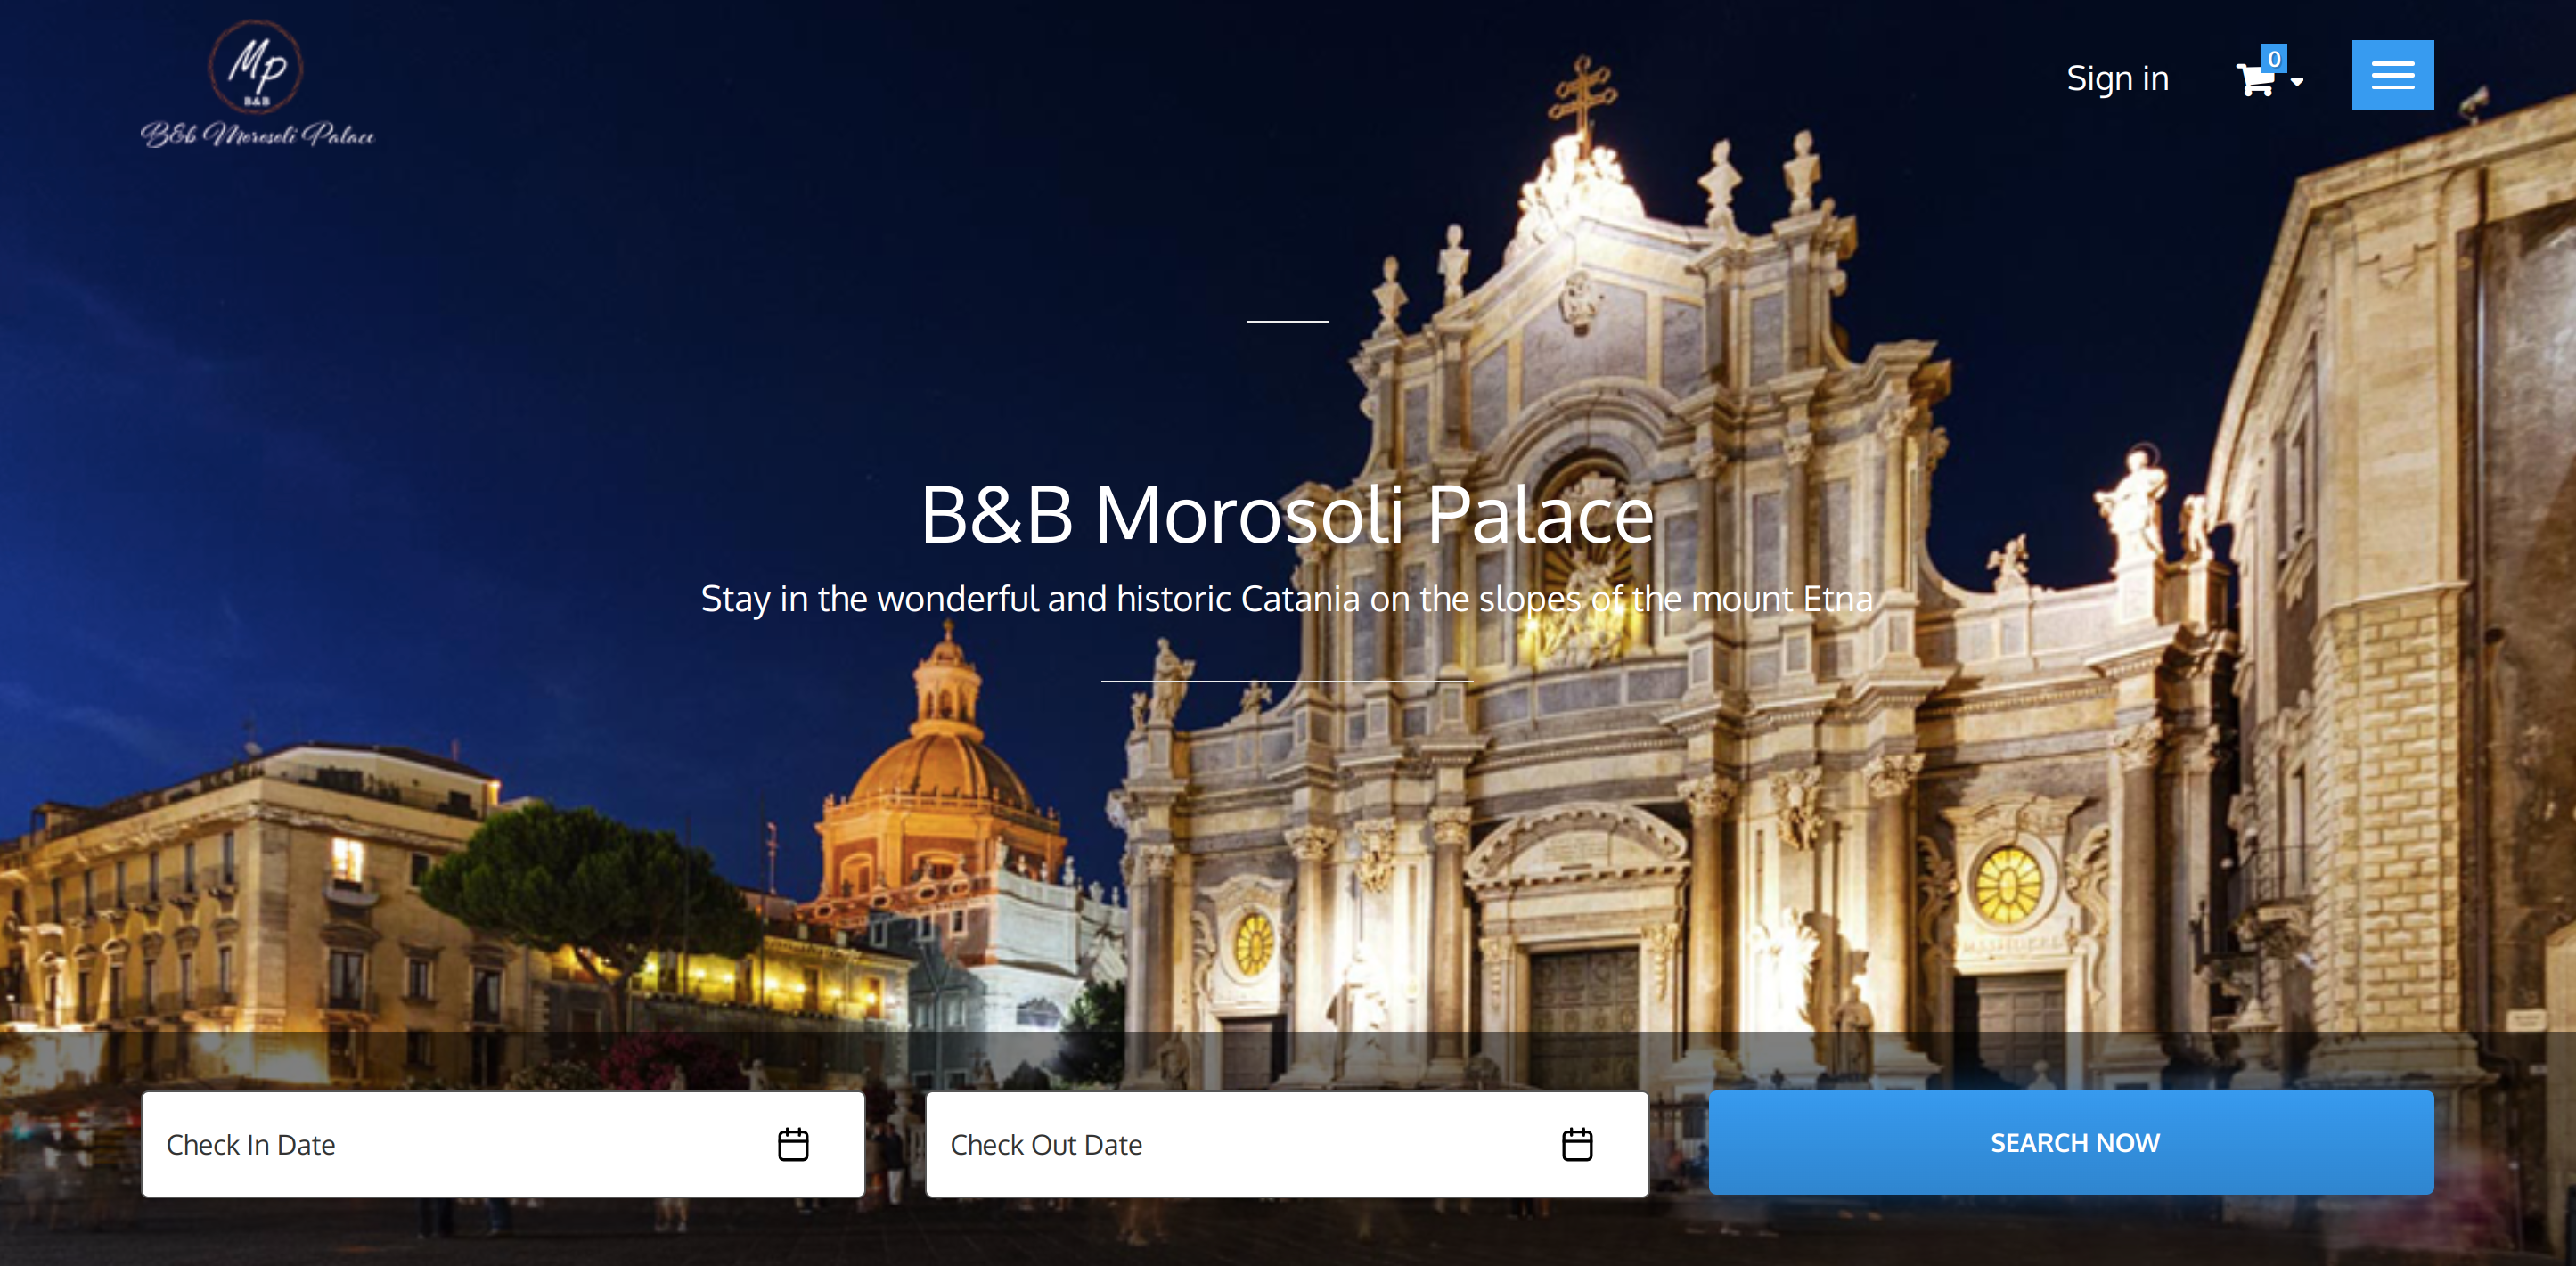 B&B Morosoli Palace homepage